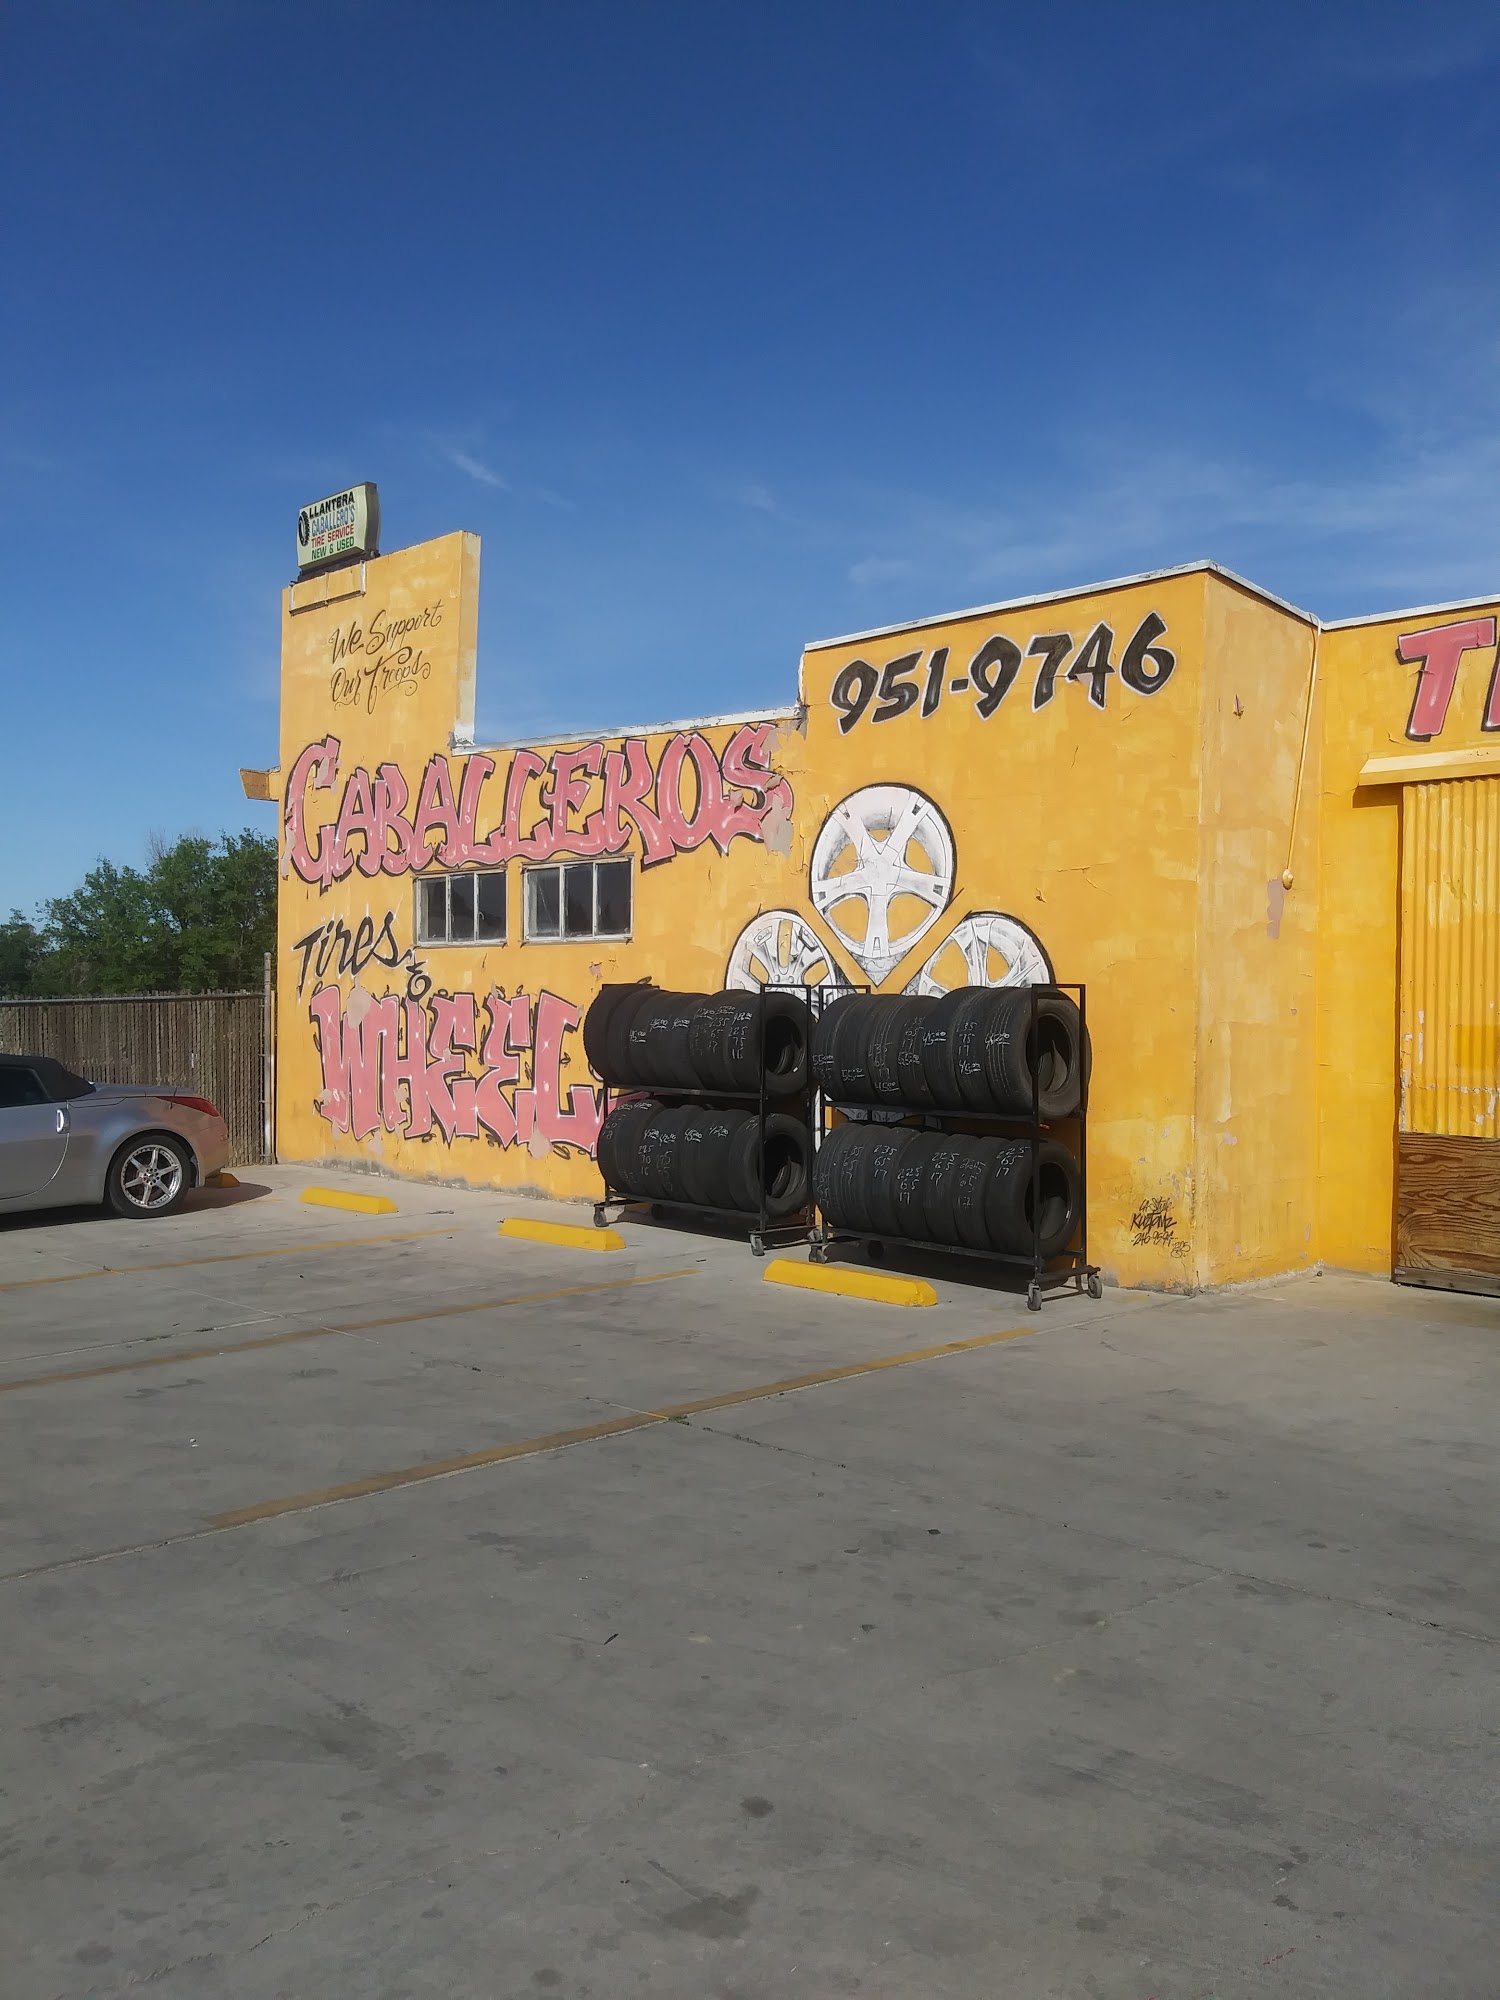 Caballero's Tire Service and Auto Repair